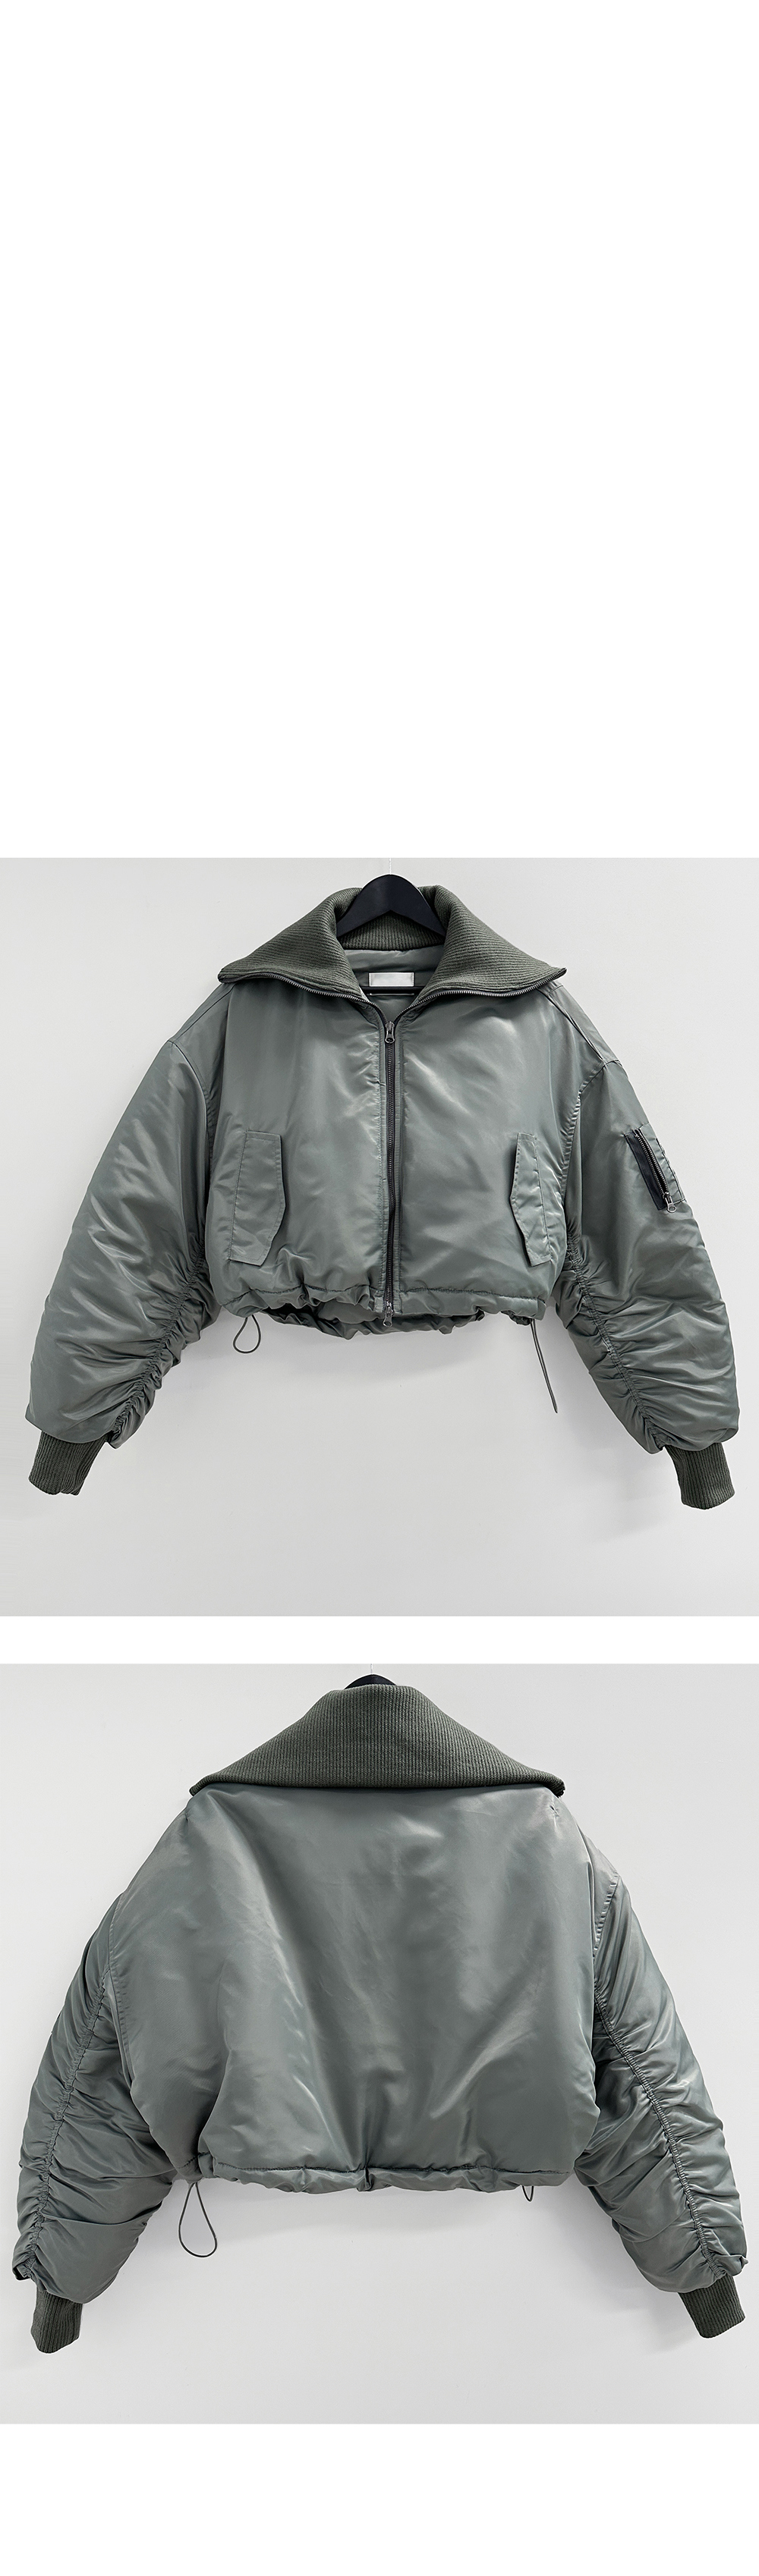 jacket grey color image-S1L9